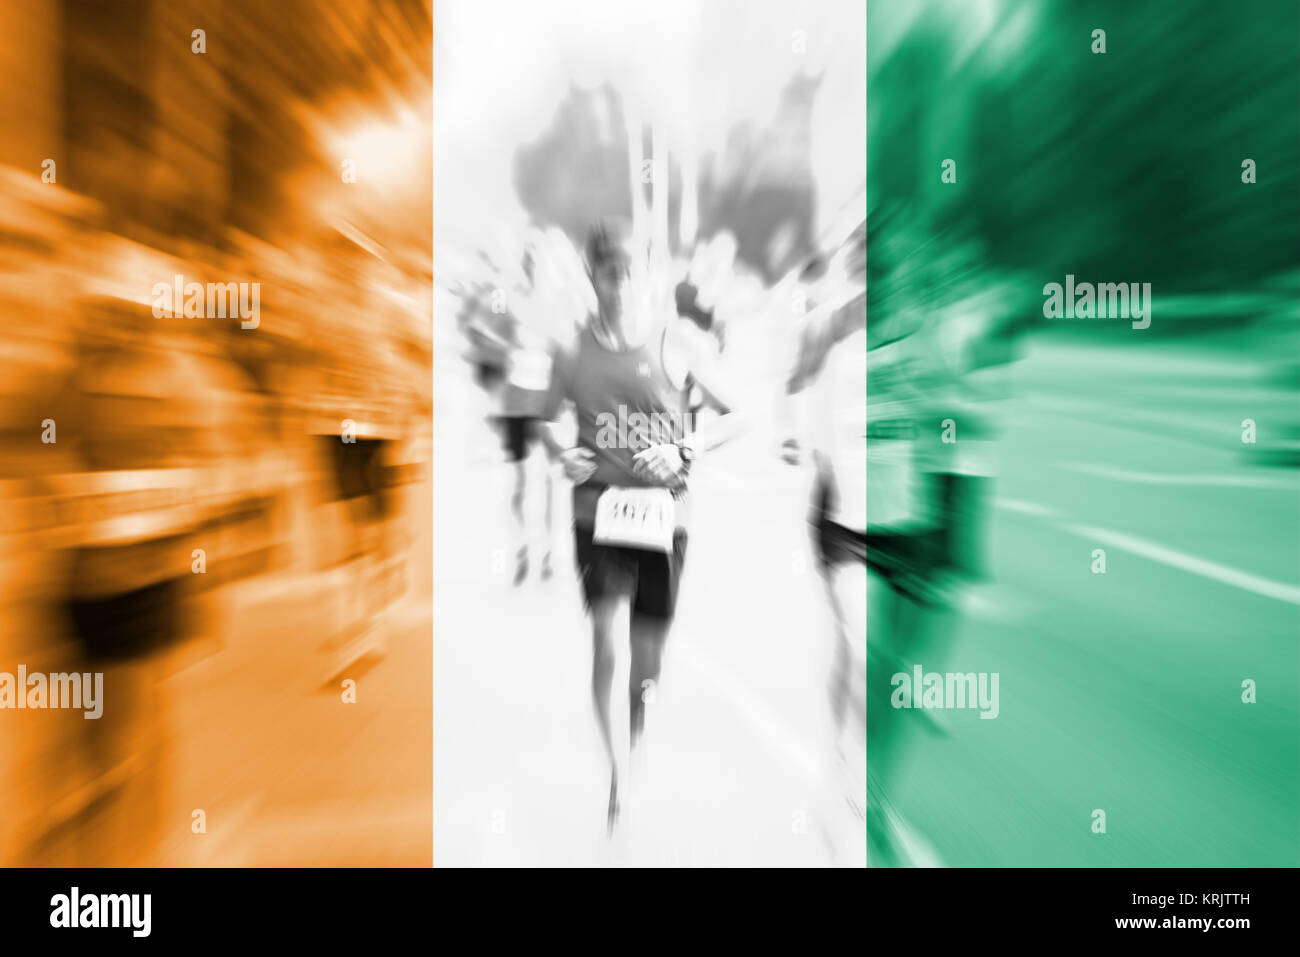 marathon runner motion blur blending with cote d'ivoire flag Stock Photo